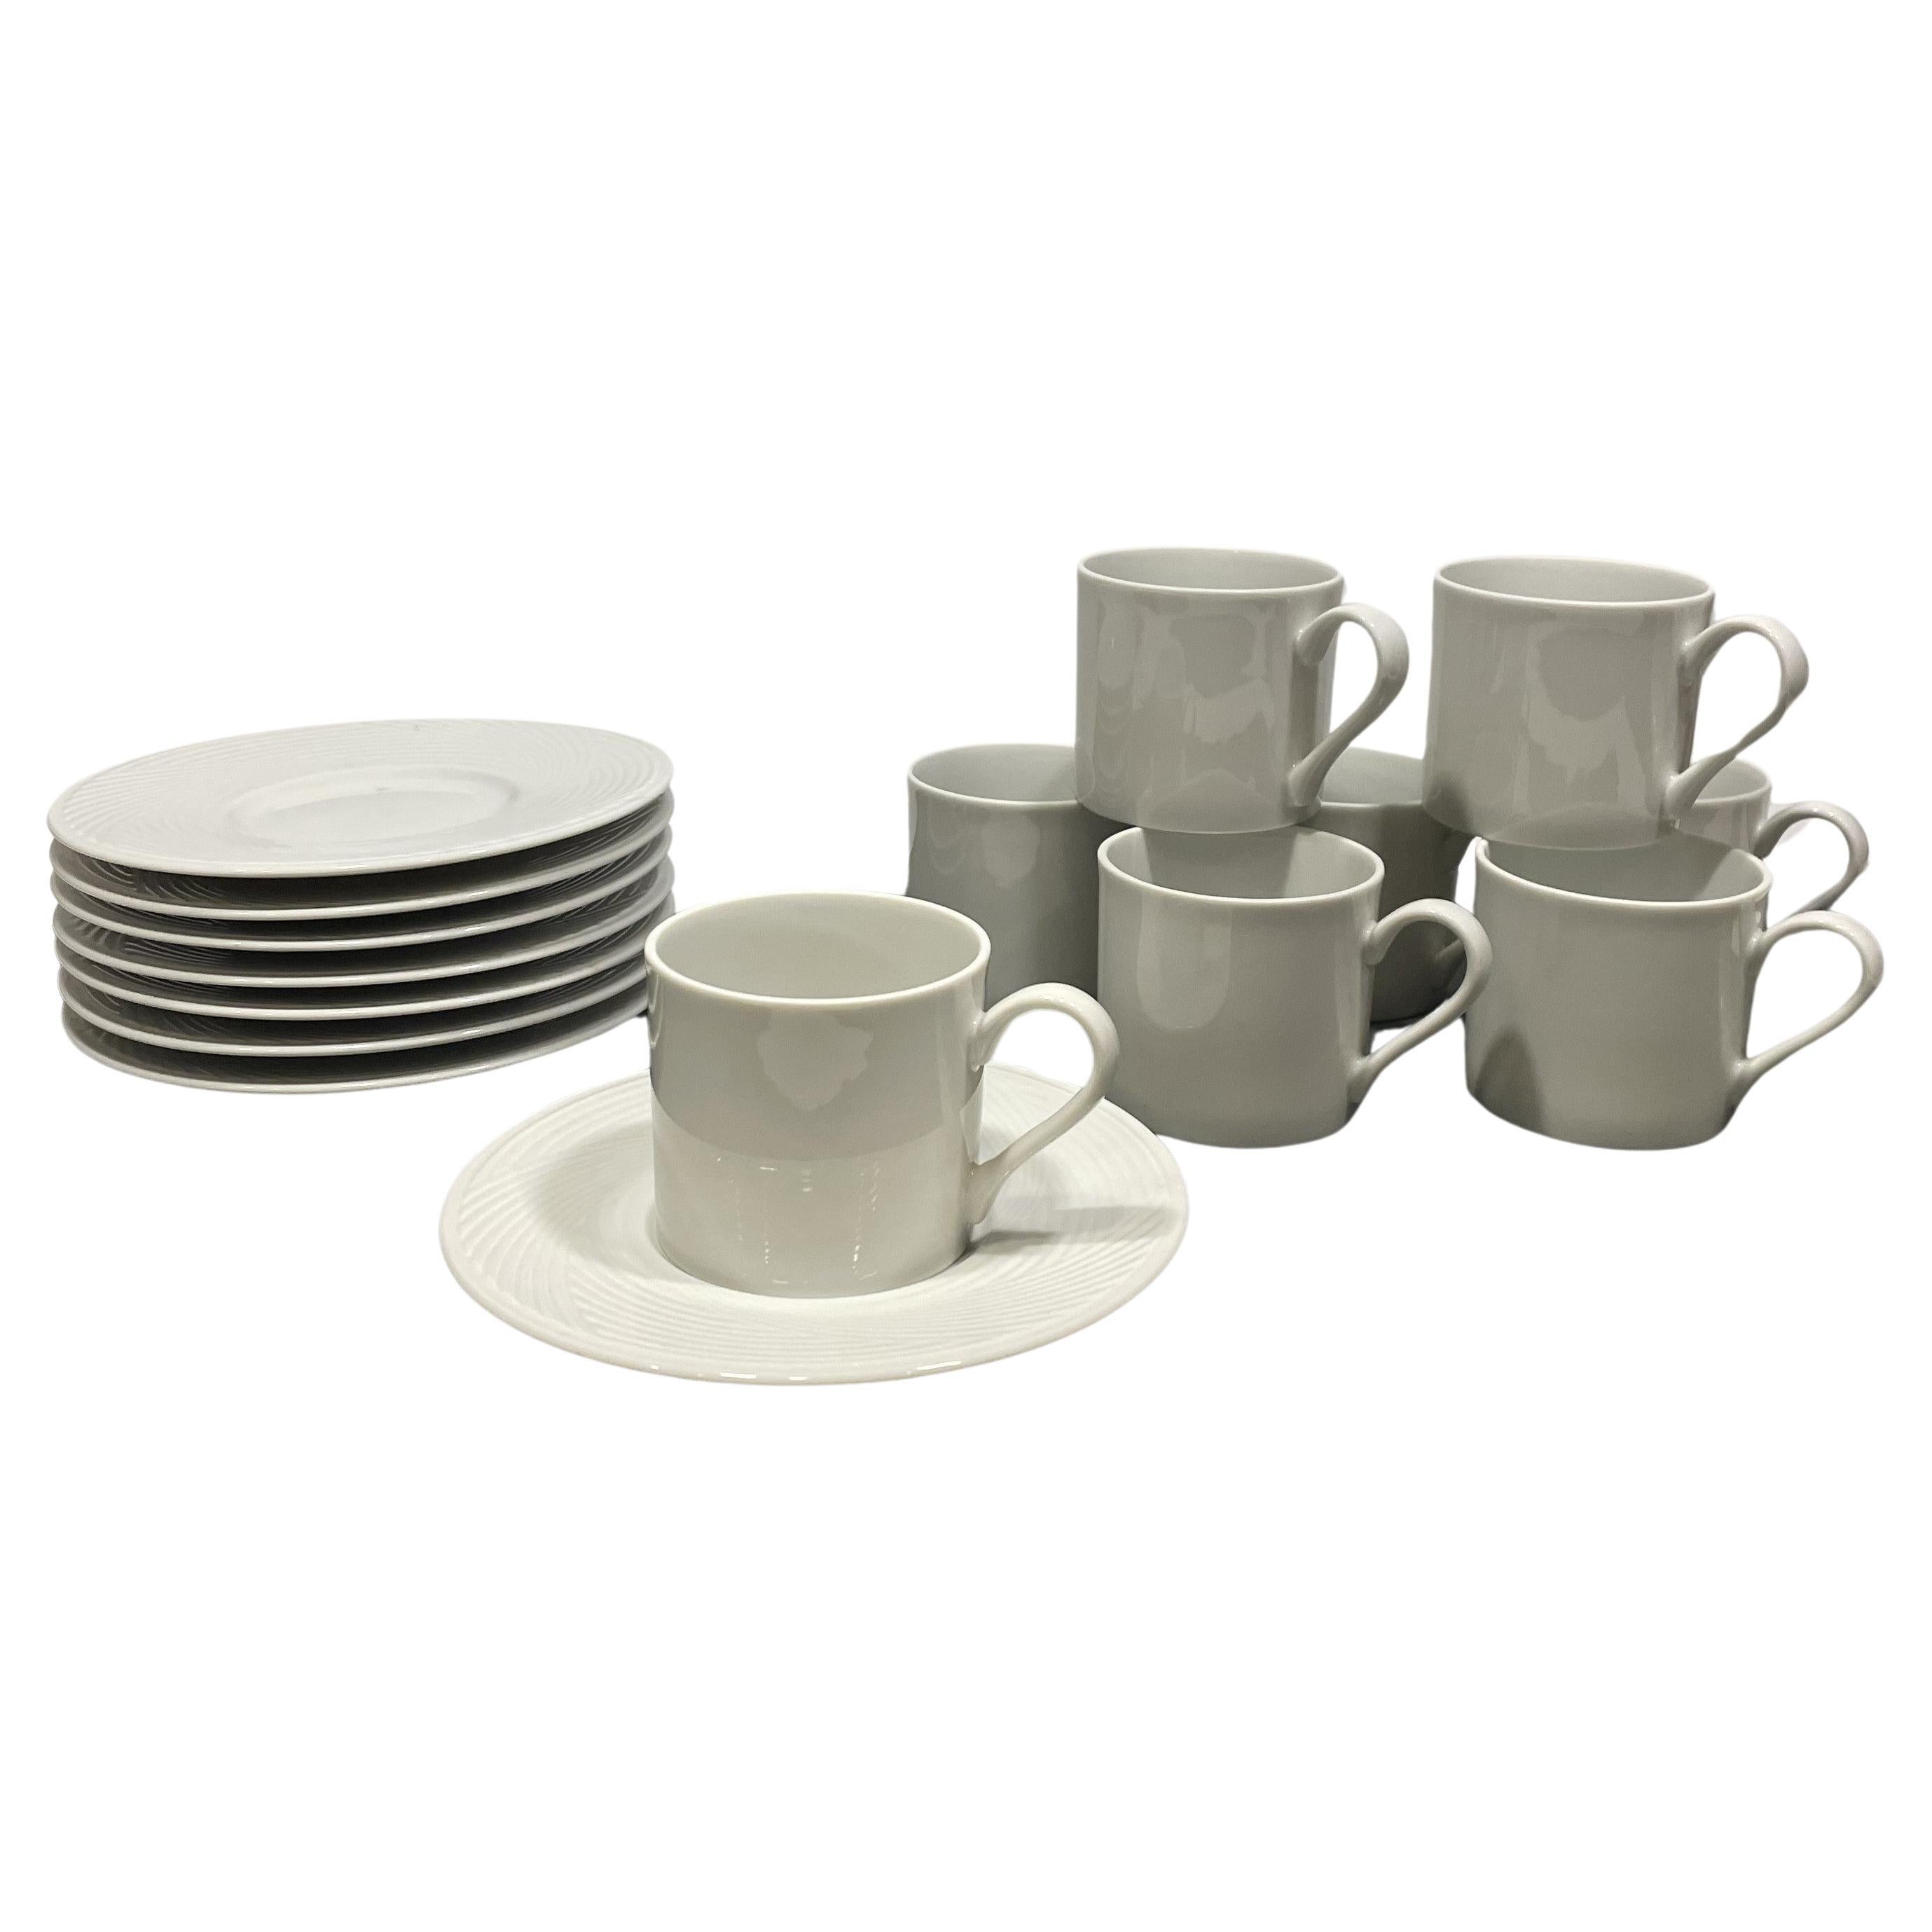 1960s White Porcelain Dansk Demitasse Cups and Saucers - Set of 8